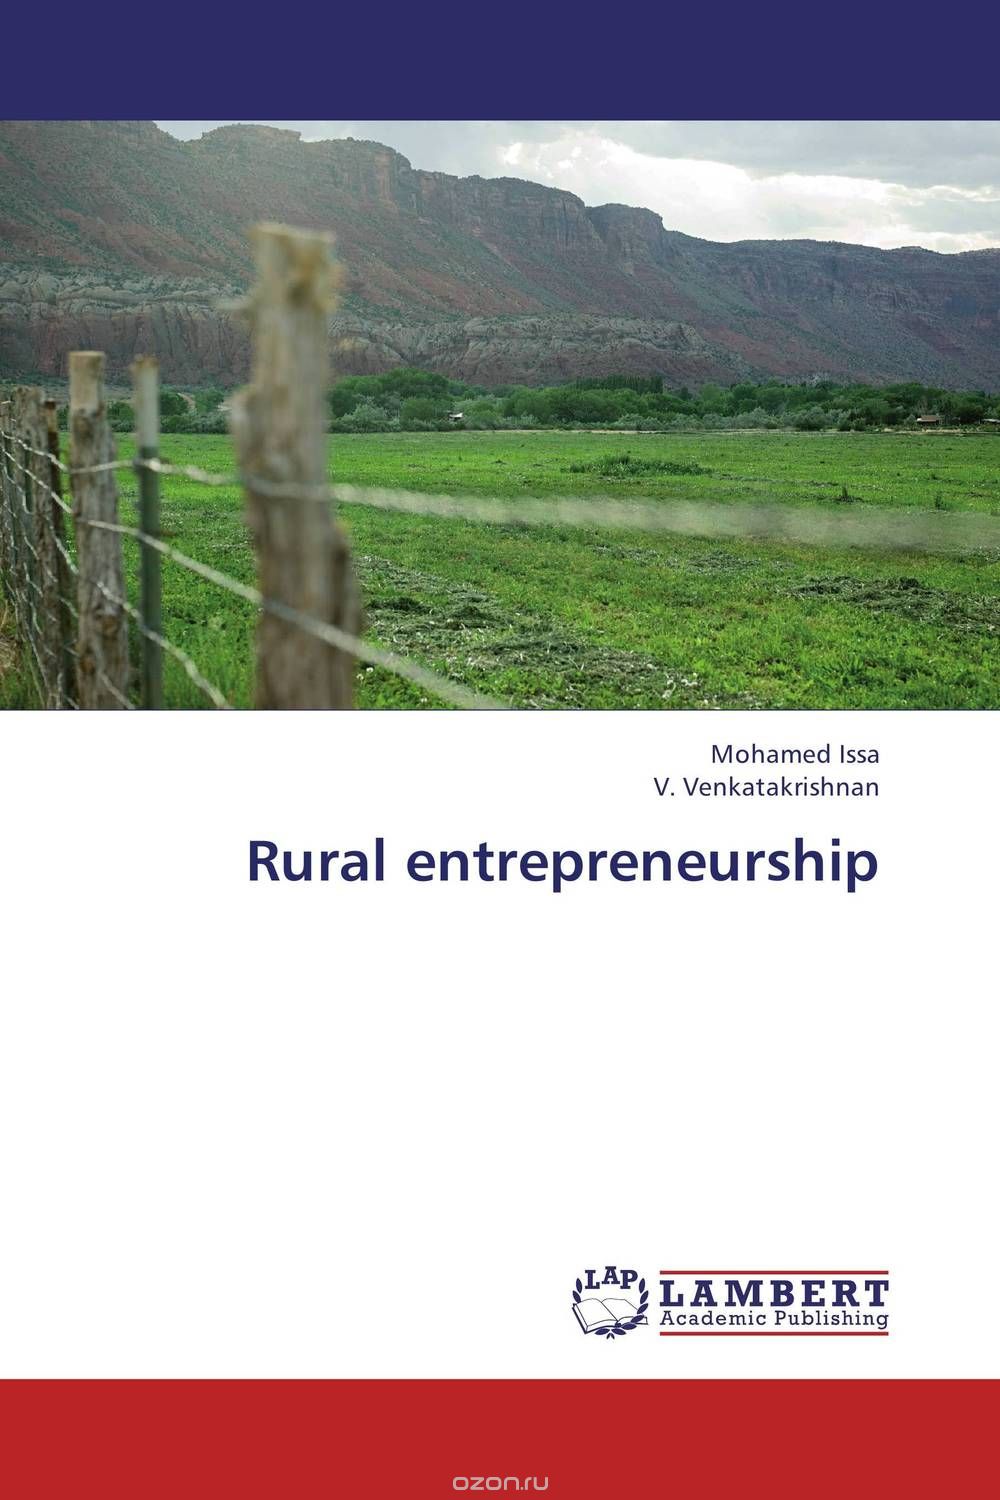 Скачать книгу "Rural entrepreneurship"